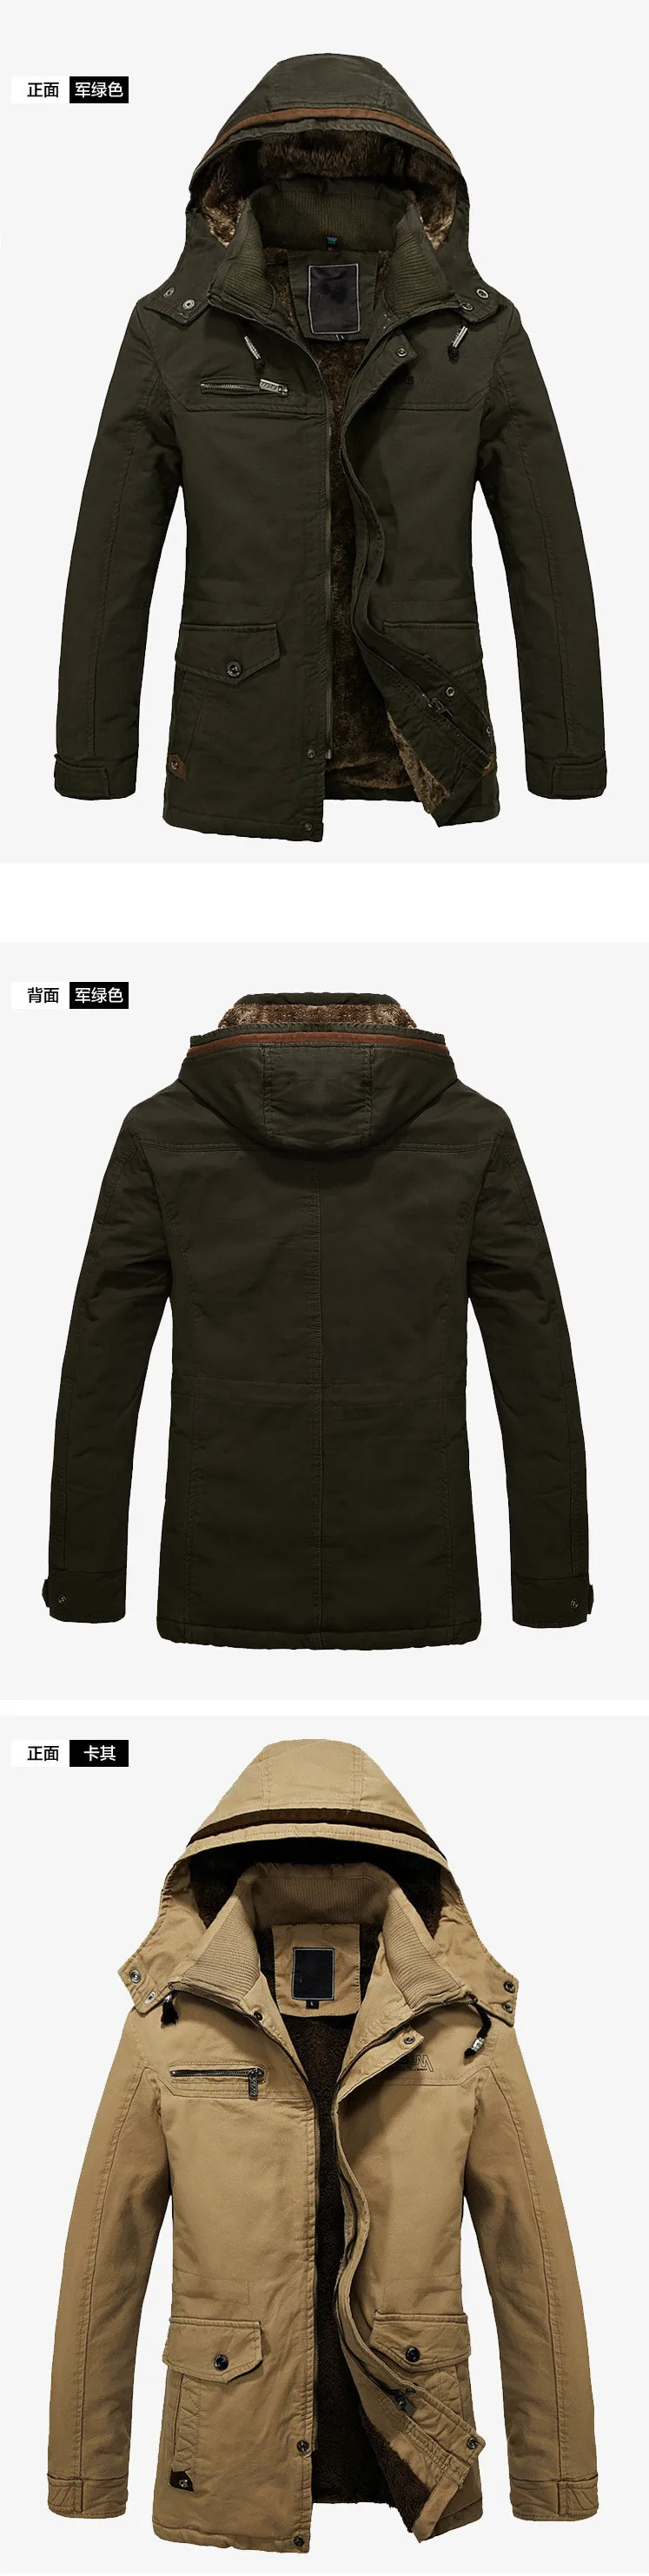 ZOEQO новая зимняя теплая мужская куртка модная Толстая куртка с капюшоном мужская куртка inverno верхняя одежда парка Мужская 582